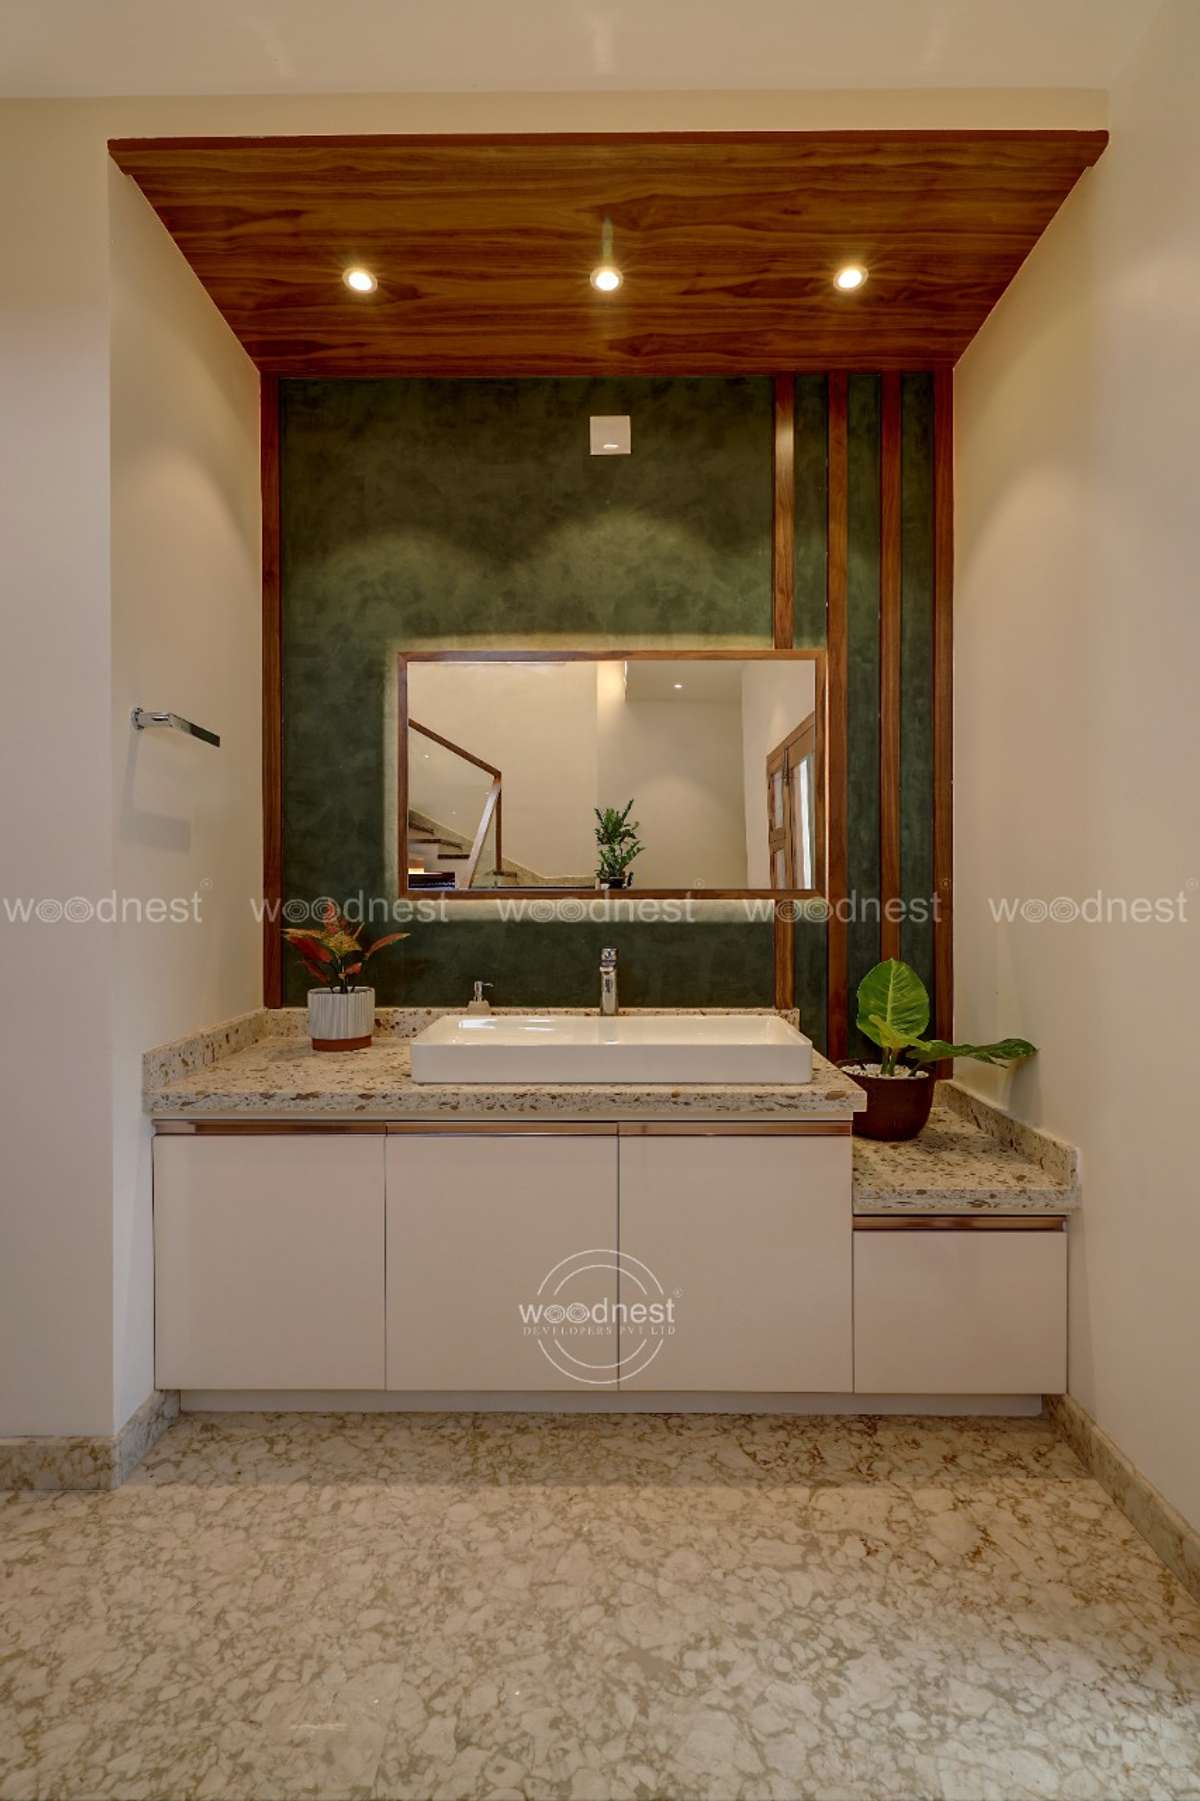 An admirable creation of Woodnest
Get us on 
ðŸ“ž +91 702593 8888  ðŸŒ� www.woodnestdevelopers.com  ðŸ“§ enquiry@woodnestdevelopers.com.
.
.
.
.
.
.
.
.
.
.
.
.
.
.
.
.
.
#woodnestinteriors #homeinteriors #homedecor #interiordesign #architecture #bedroomdesigns #modularkitchen #interiorstyling #luxuryhomes #homedecoration